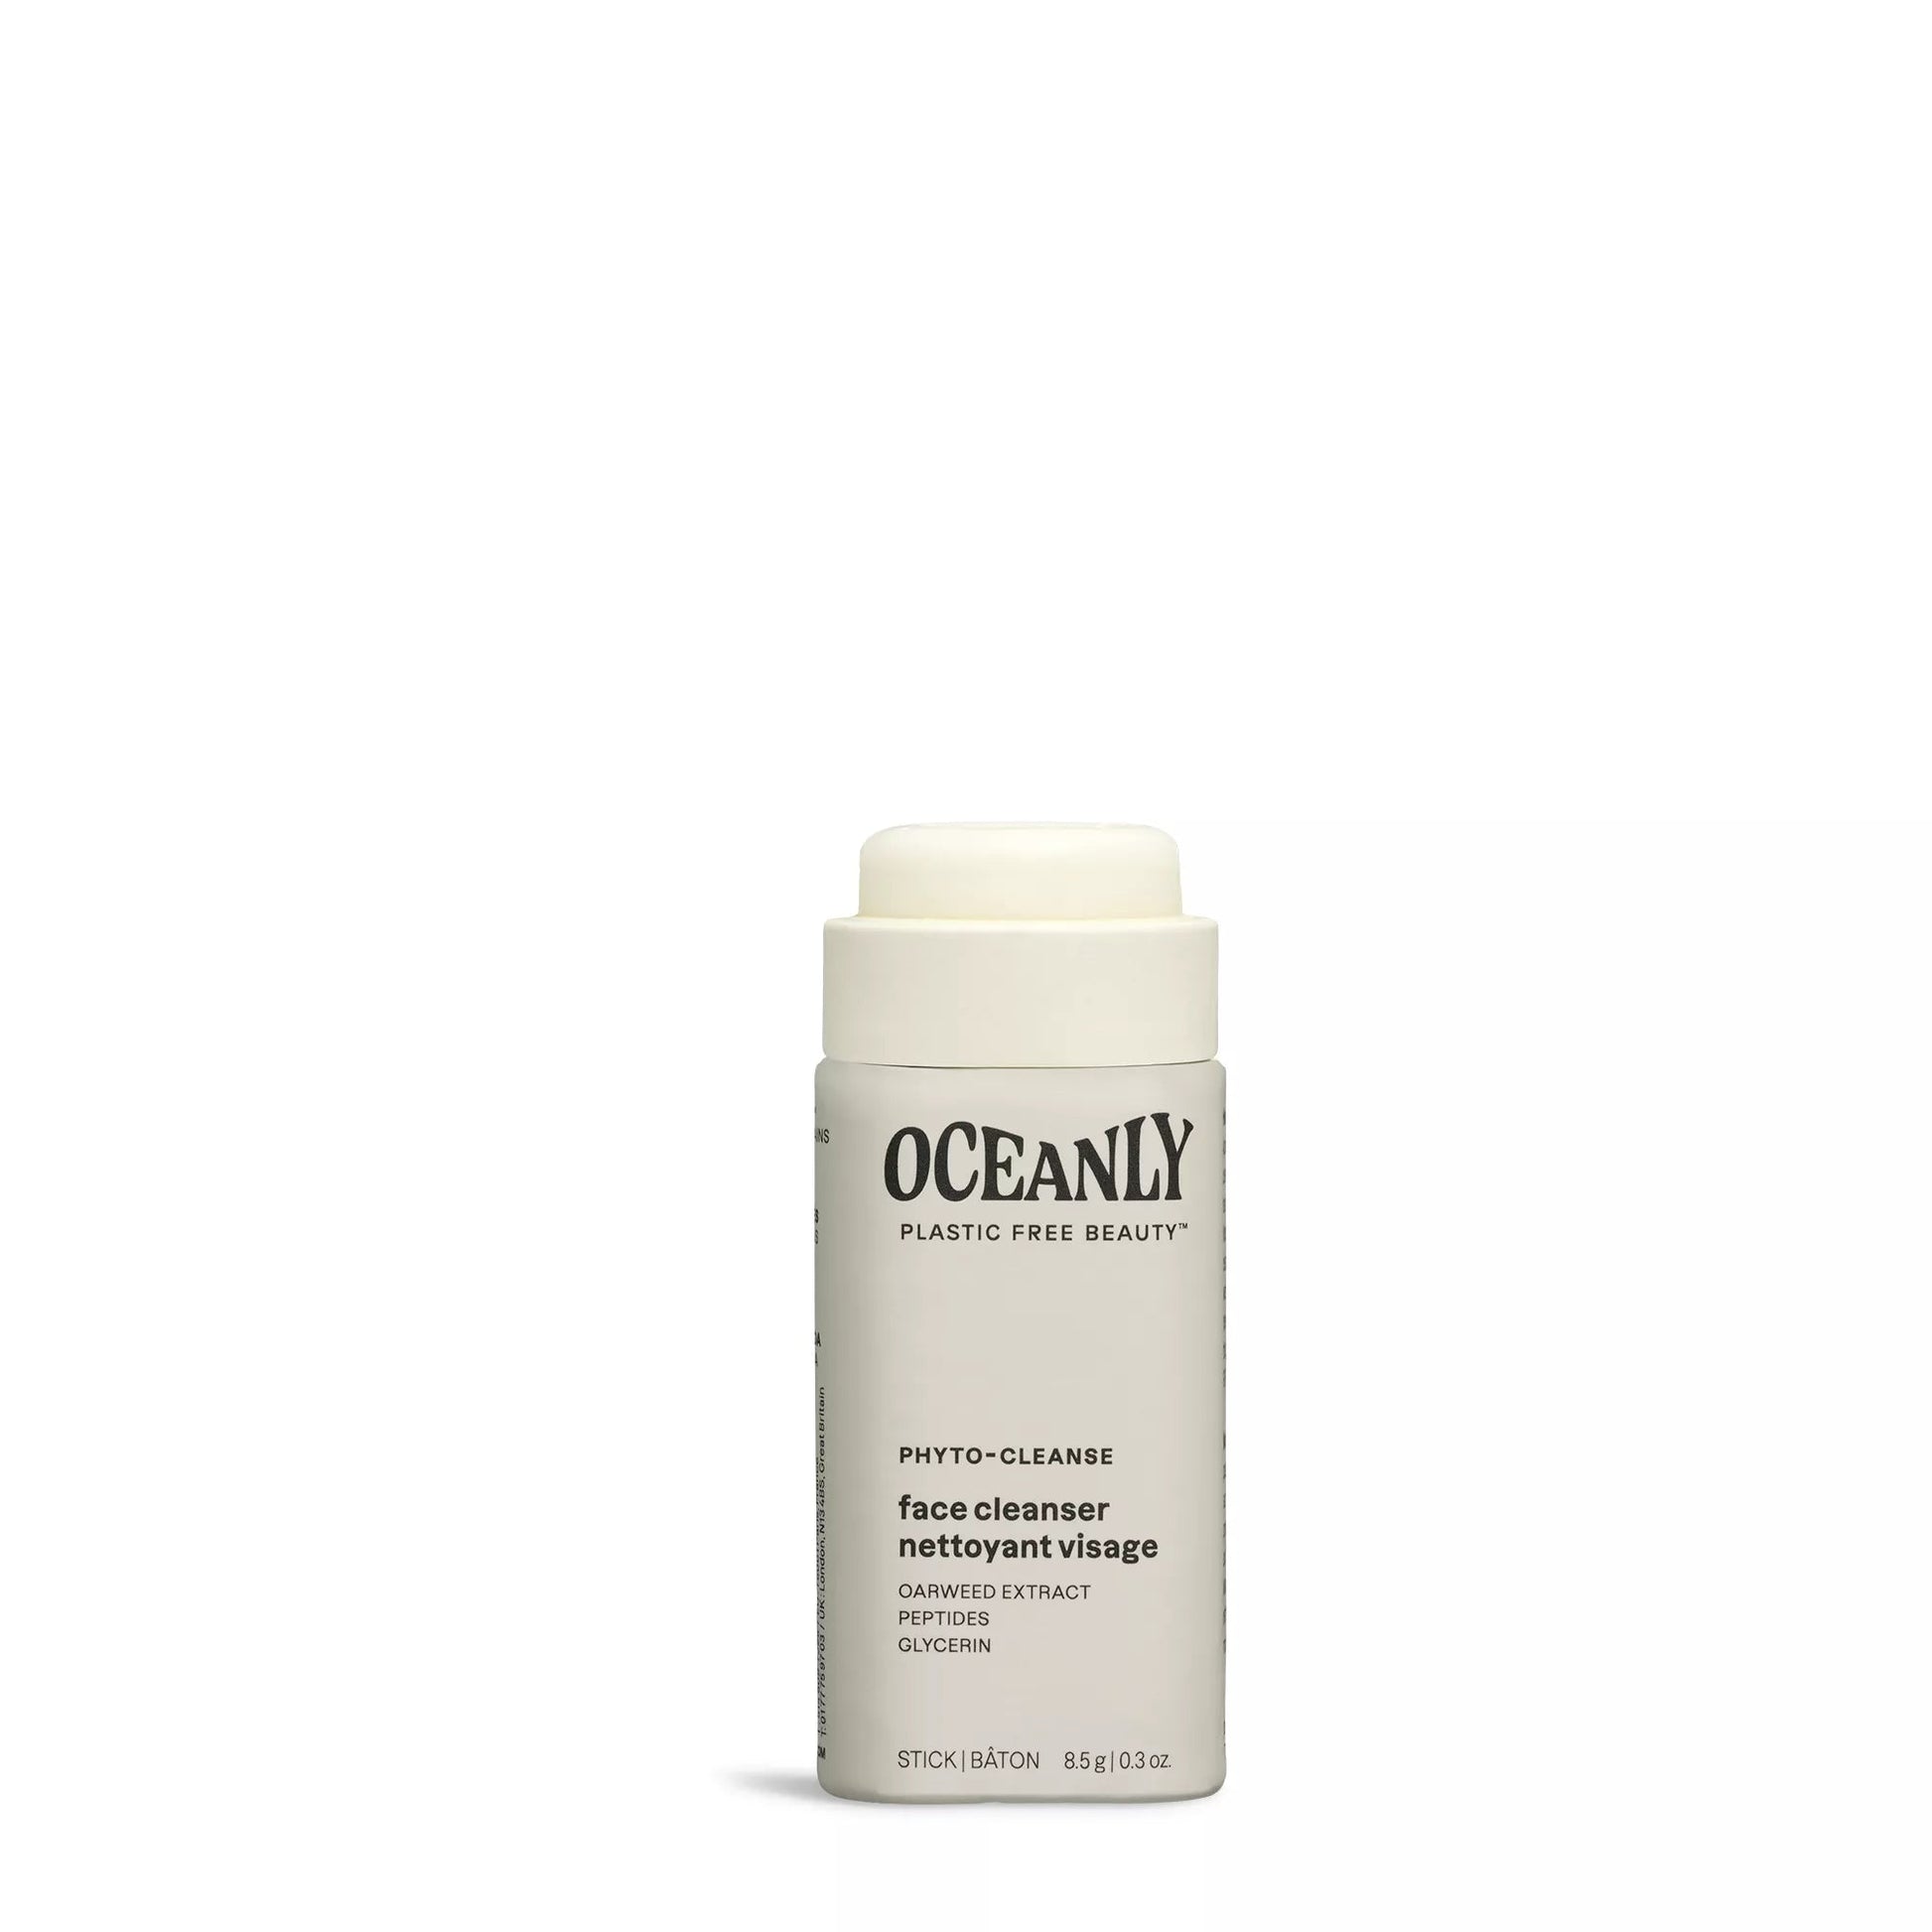     ATTITUDE oceanly phyto-cleanse mini nettoyant visage 16084_fr? 8.5g Sans odeur